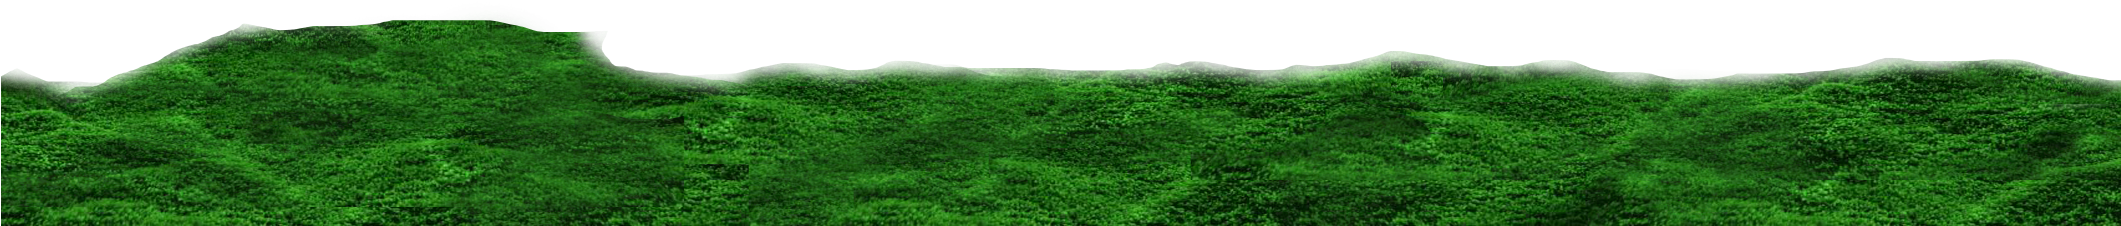 Parallax Green Front - Lawn (2120x1280)